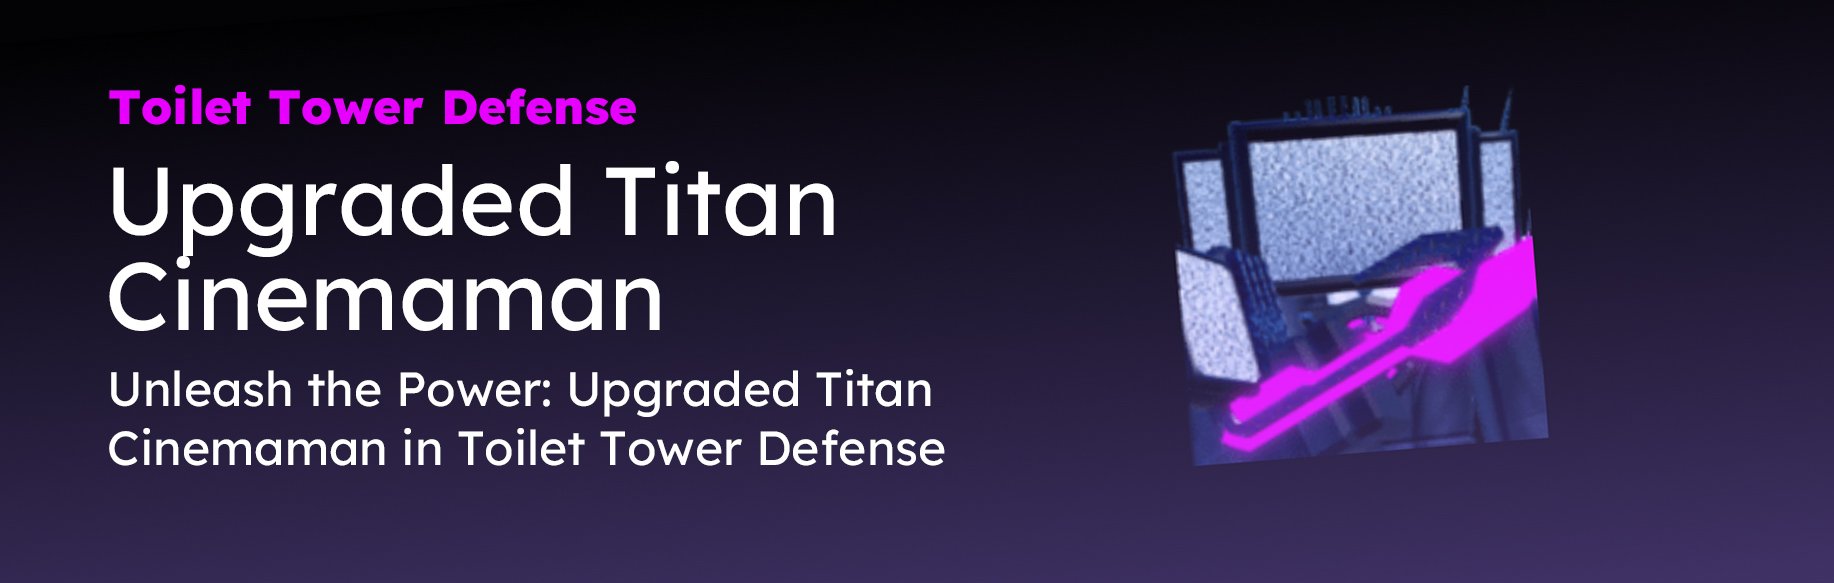 Unleash the Power: Upgraded Titan Cinemaman in Toilet Tower Defense